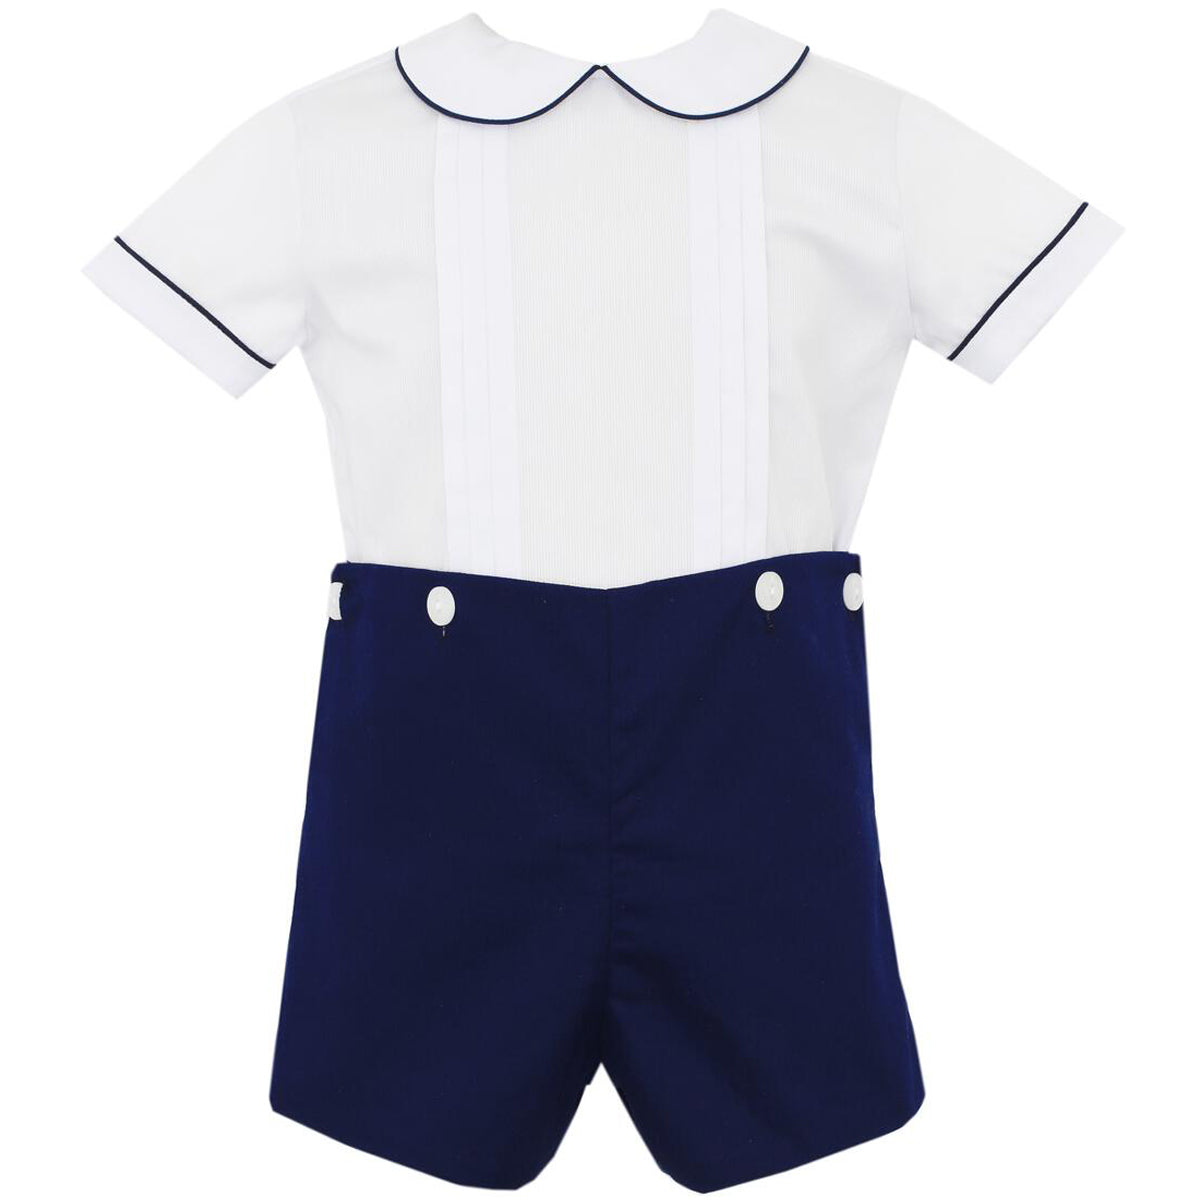 Navy Blue Pique Button On Shorts W/ White Pique Shirt